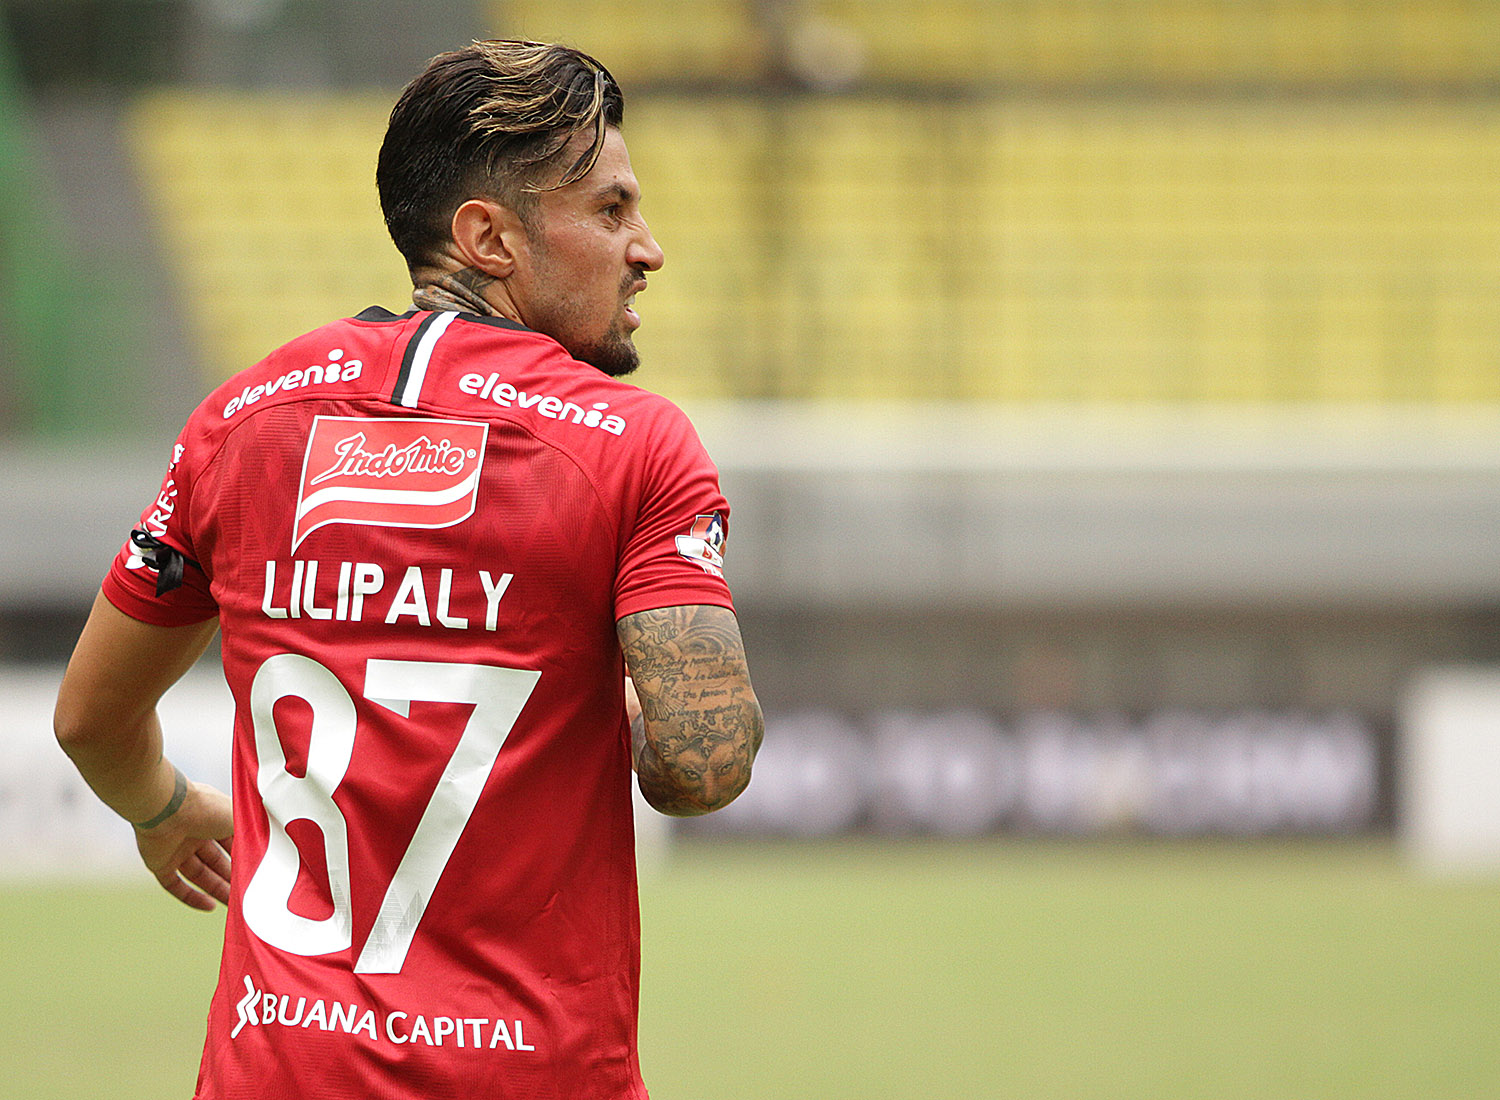 Stefano Lilipaly Berharap Jasanya Selama Tiga Musim Dihargai Bali United